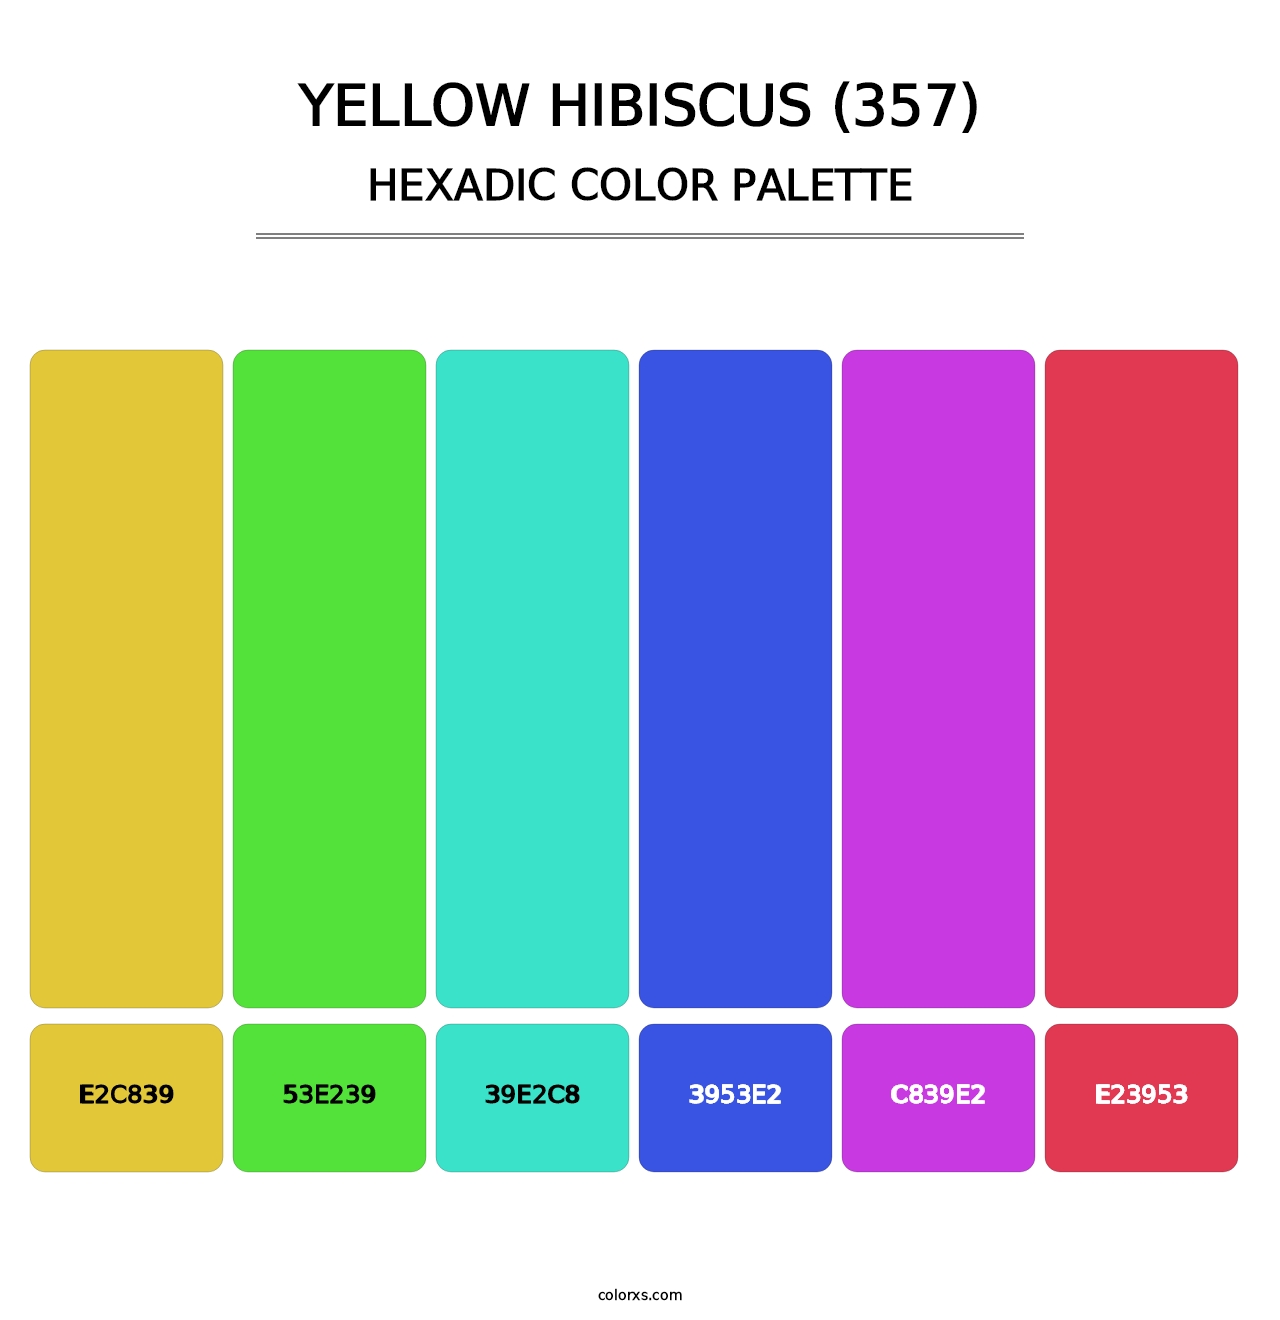 Yellow Hibiscus (357) - Hexadic Color Palette